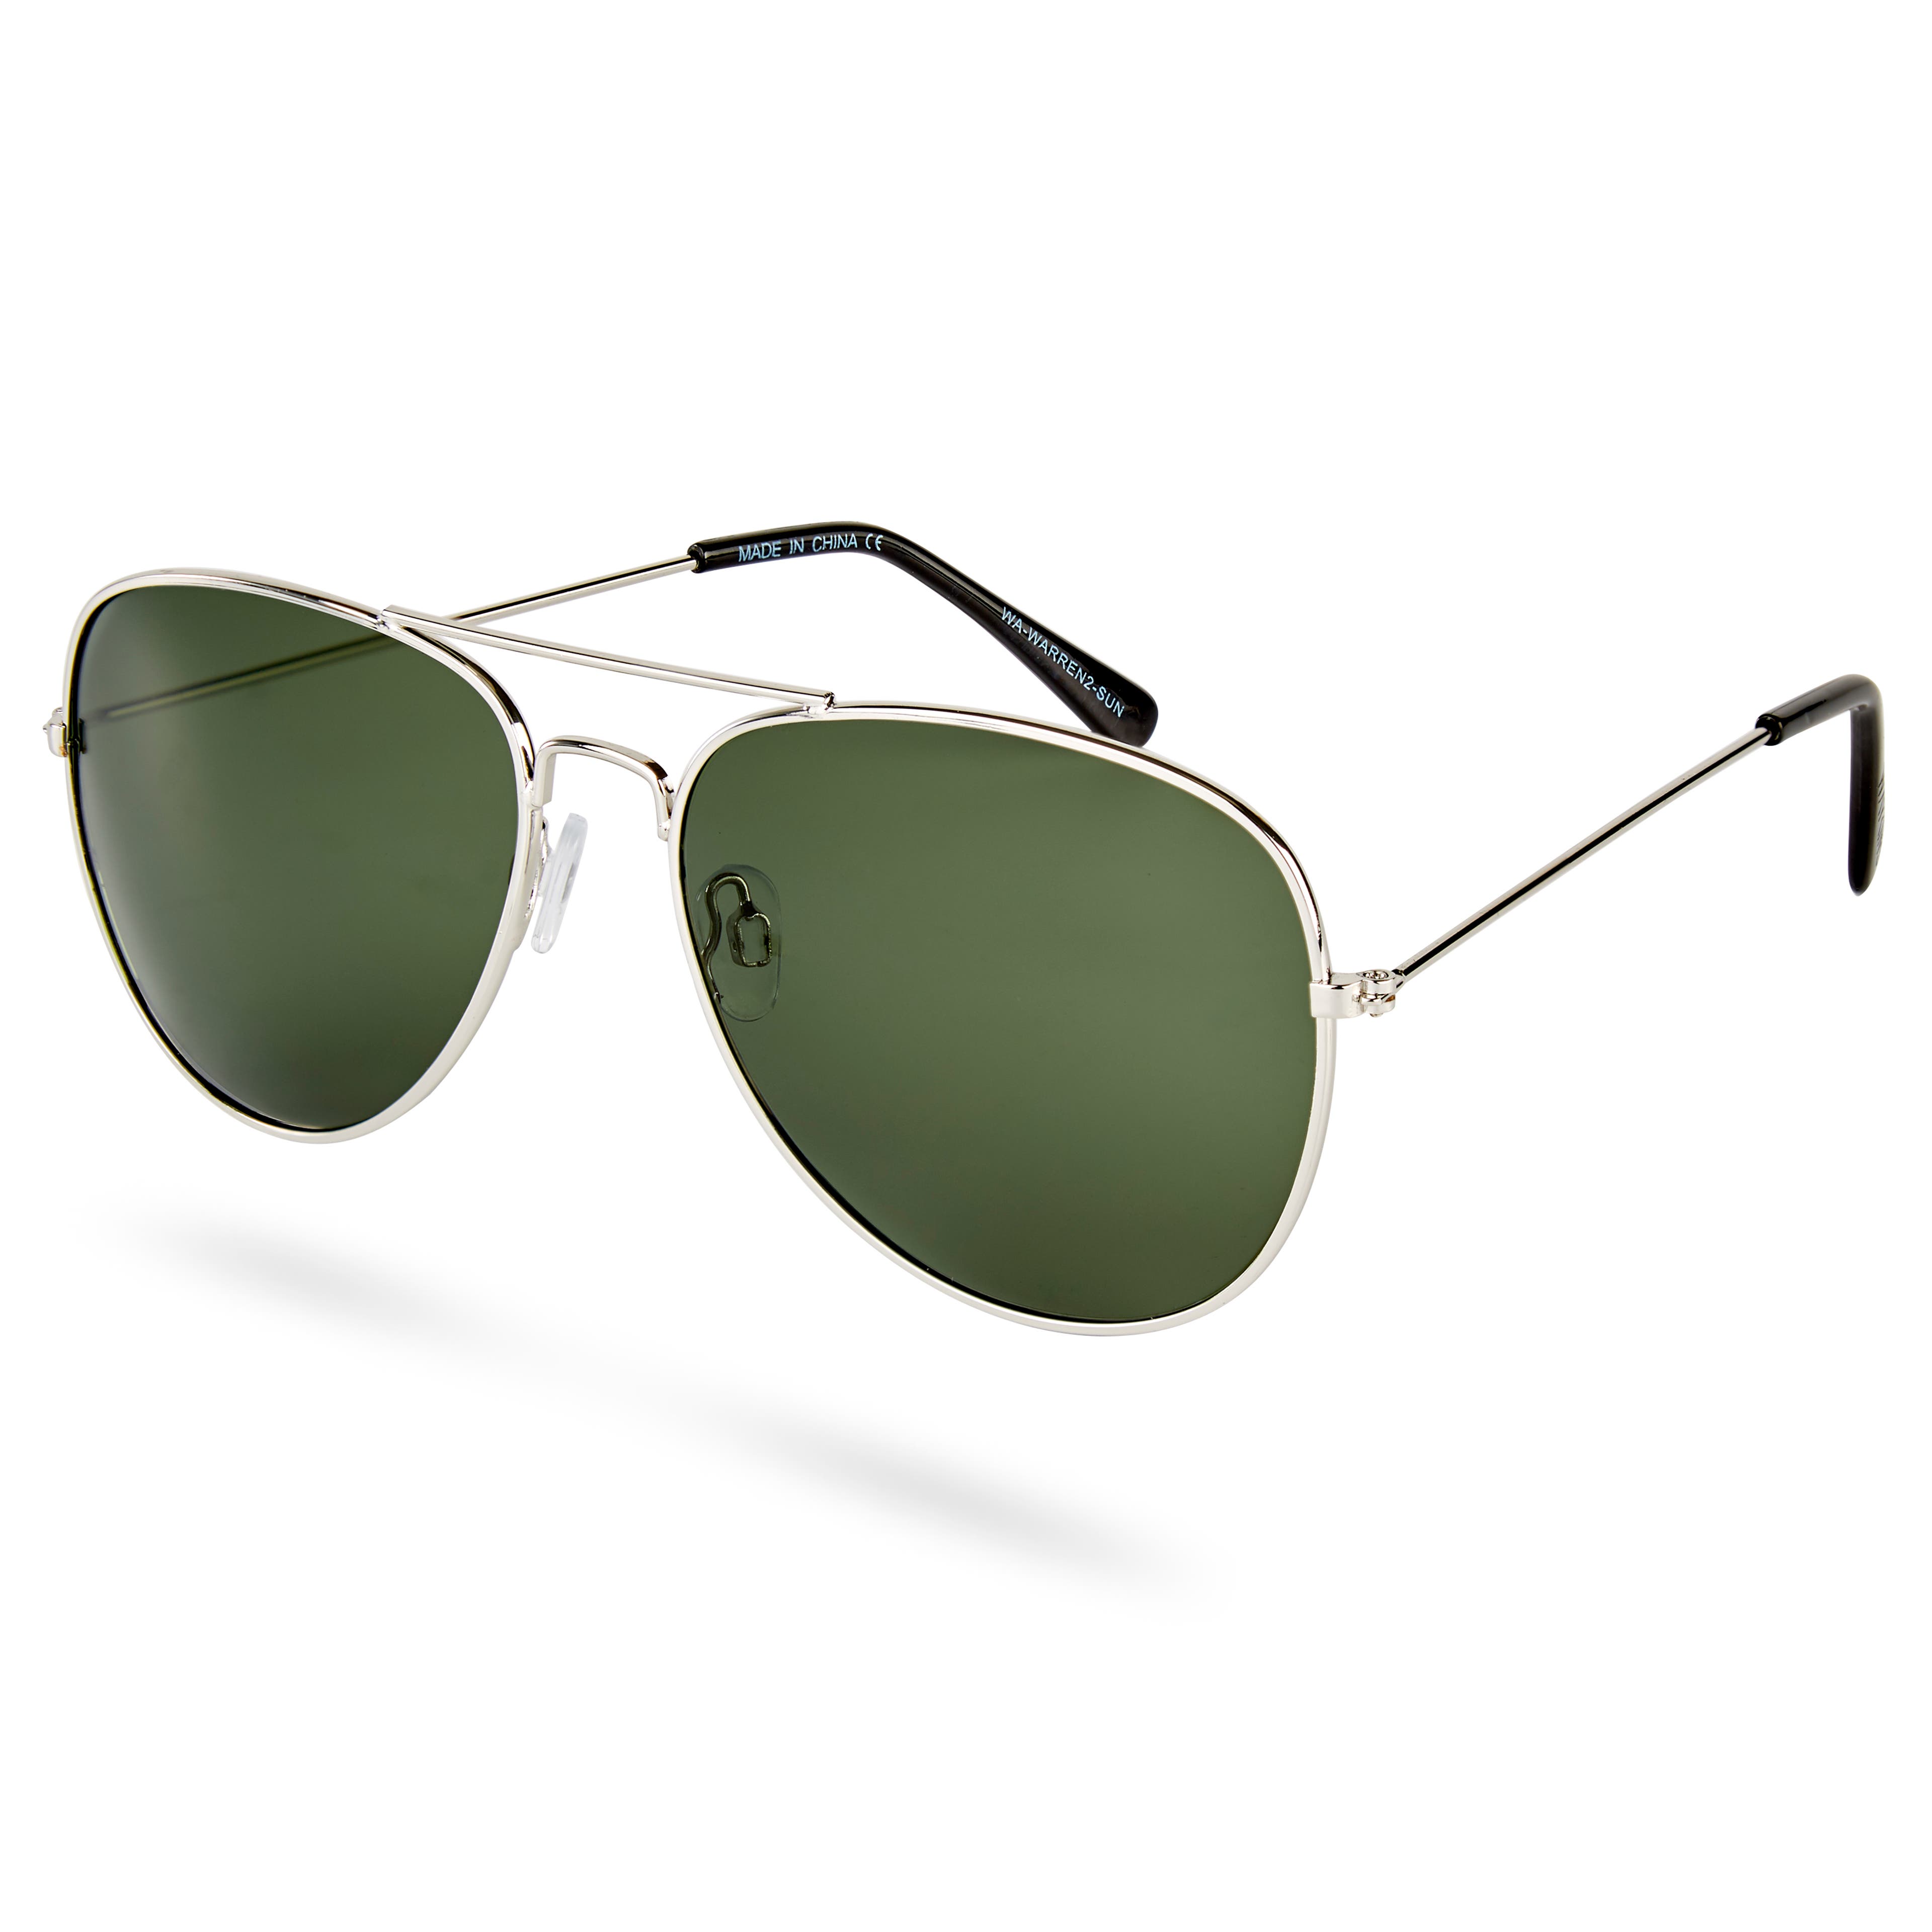 Warren Silver-Tone & Green Aviator Vista Sunglasses